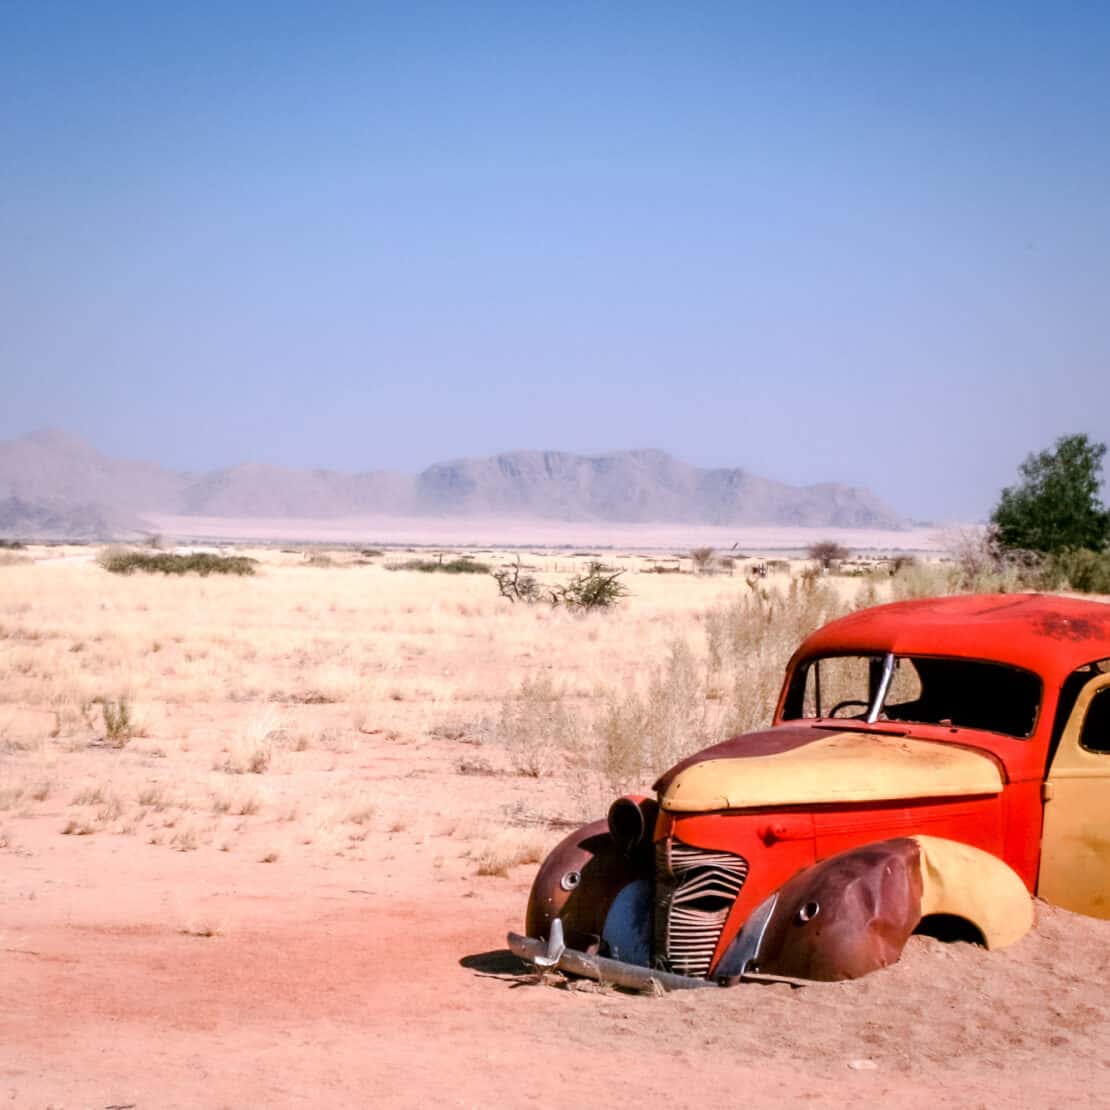 Rusting orange car abandoned in the desert